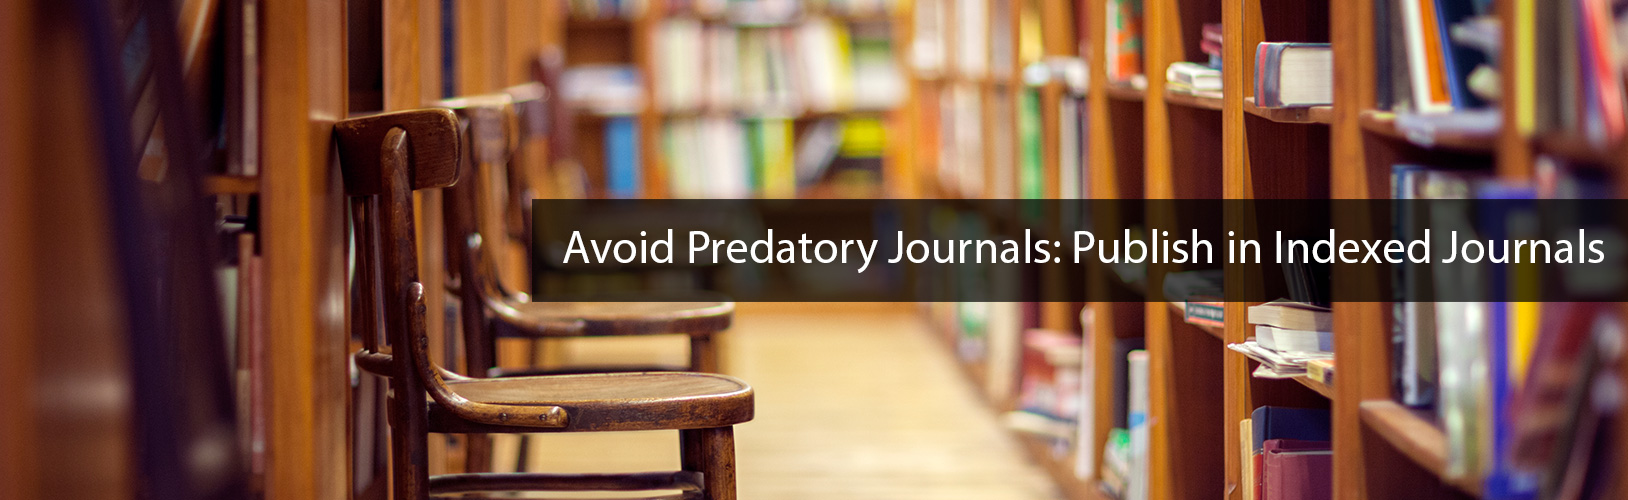 Avoid Predatory journals: Publish in Indexed Journals